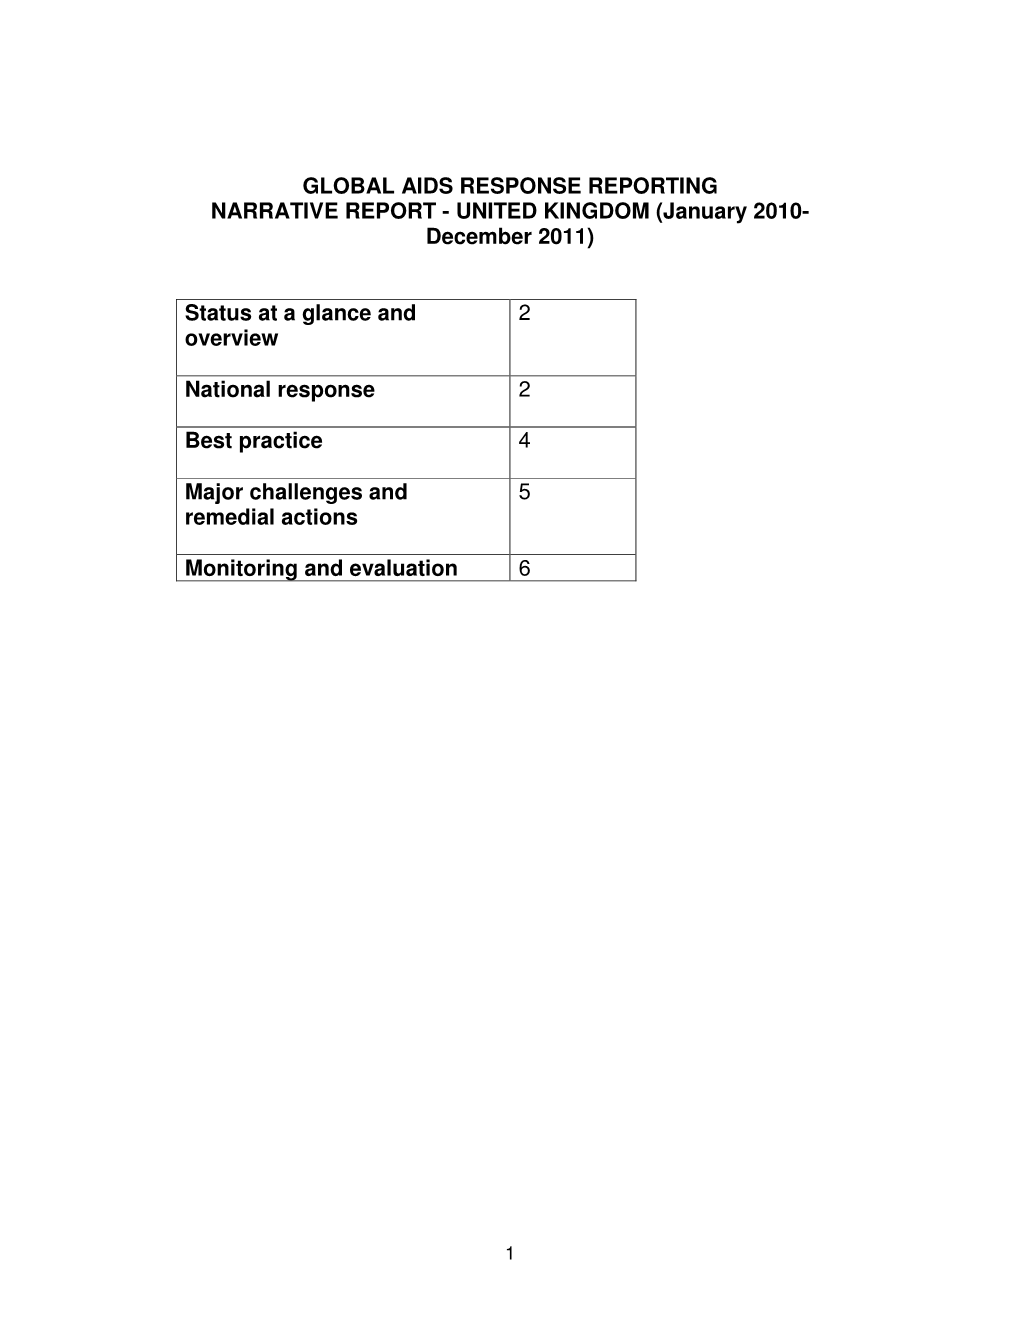 GLOBAL AIDS RESPONSE REPORTING NARRATIVE REPORT - UNITED KINGDOM (January 2010- December 2011)